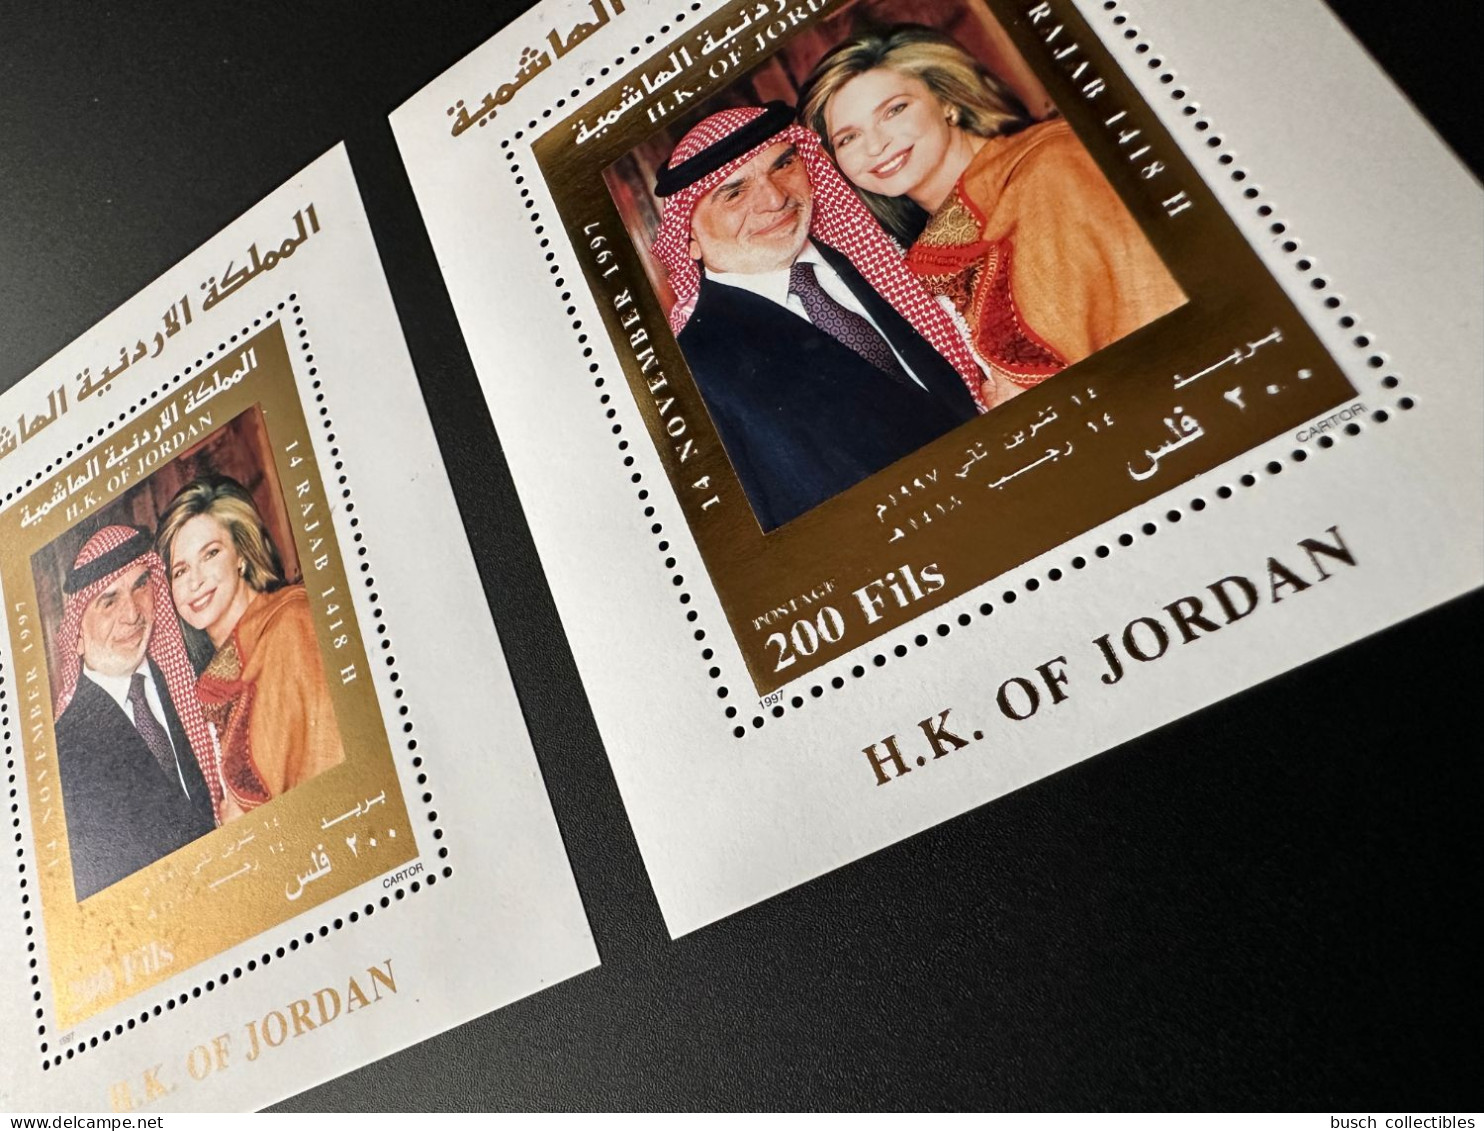 Jordan Jordanie Jordanien 1997 Mi. Bl. 84 RARE GOLD S/S Unknown Not Listed Hussein II Birthday - Jordania